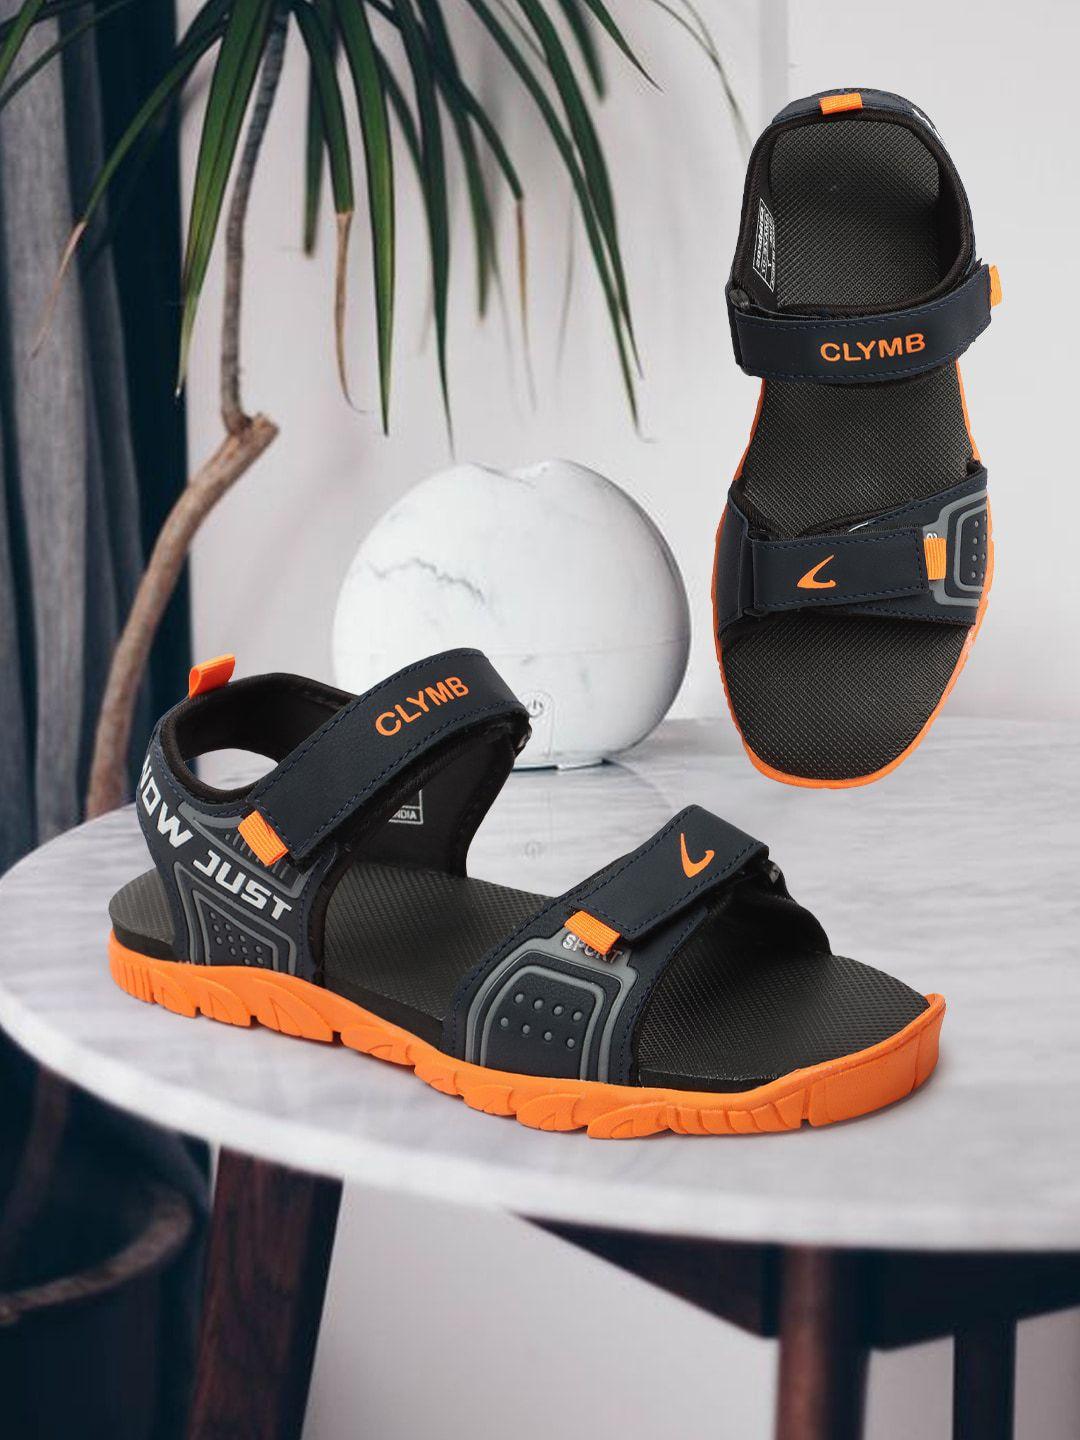 clymb-men-spa-11-brand-logo-printed-comfort-fit-velcro-closure-sports-sandals